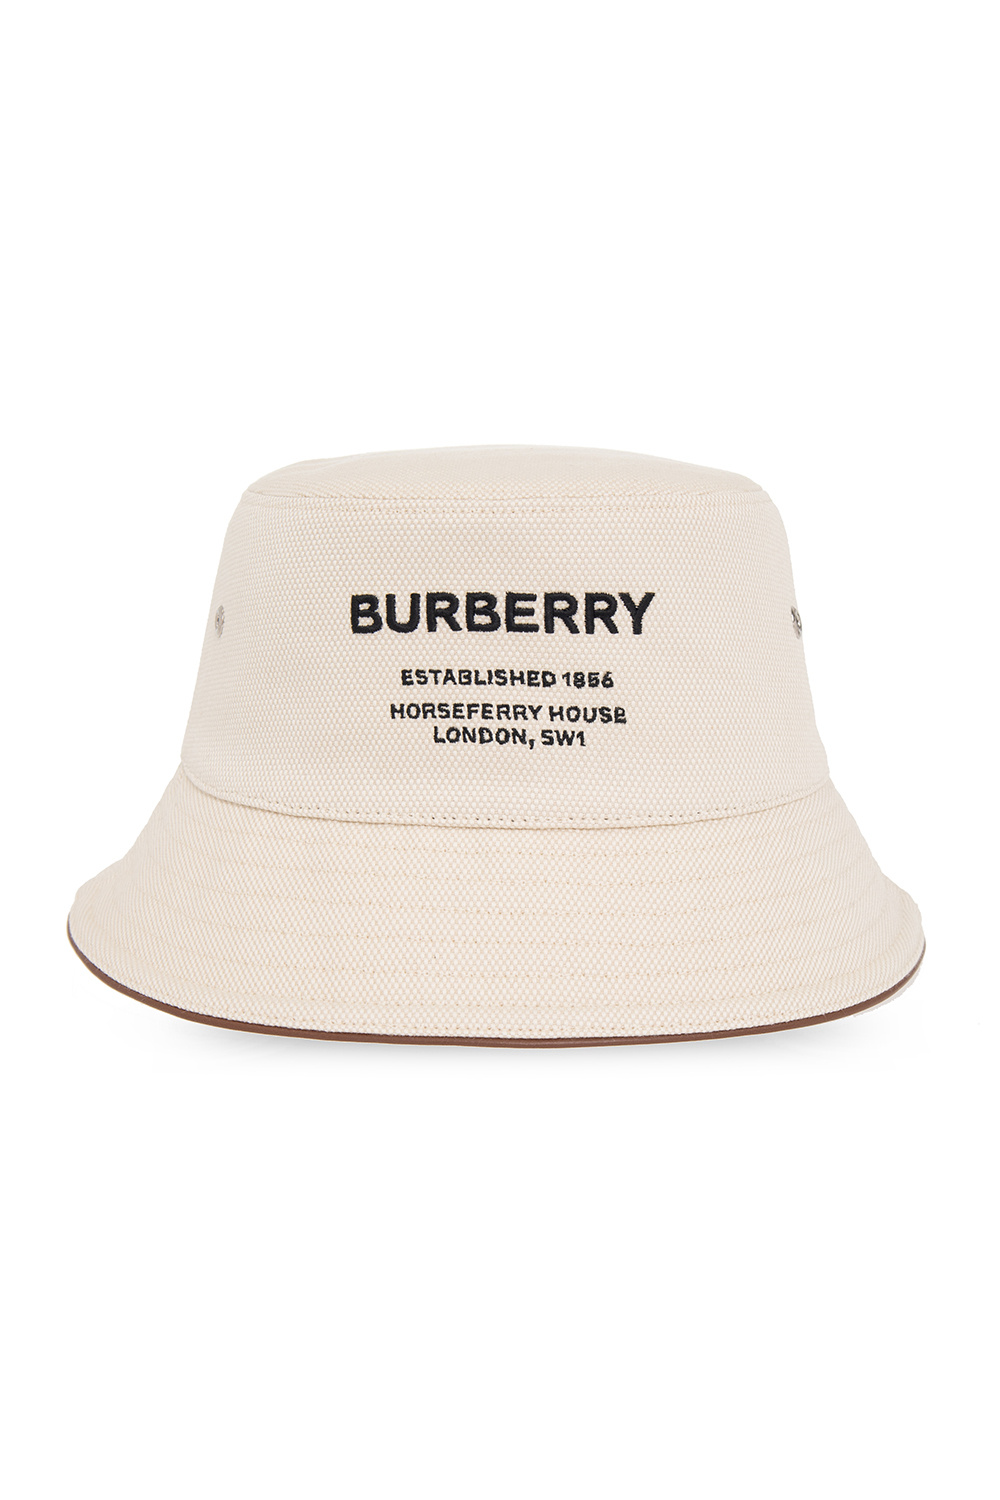 Burberry PowerPuff Girls Licenced Girl Hat purple